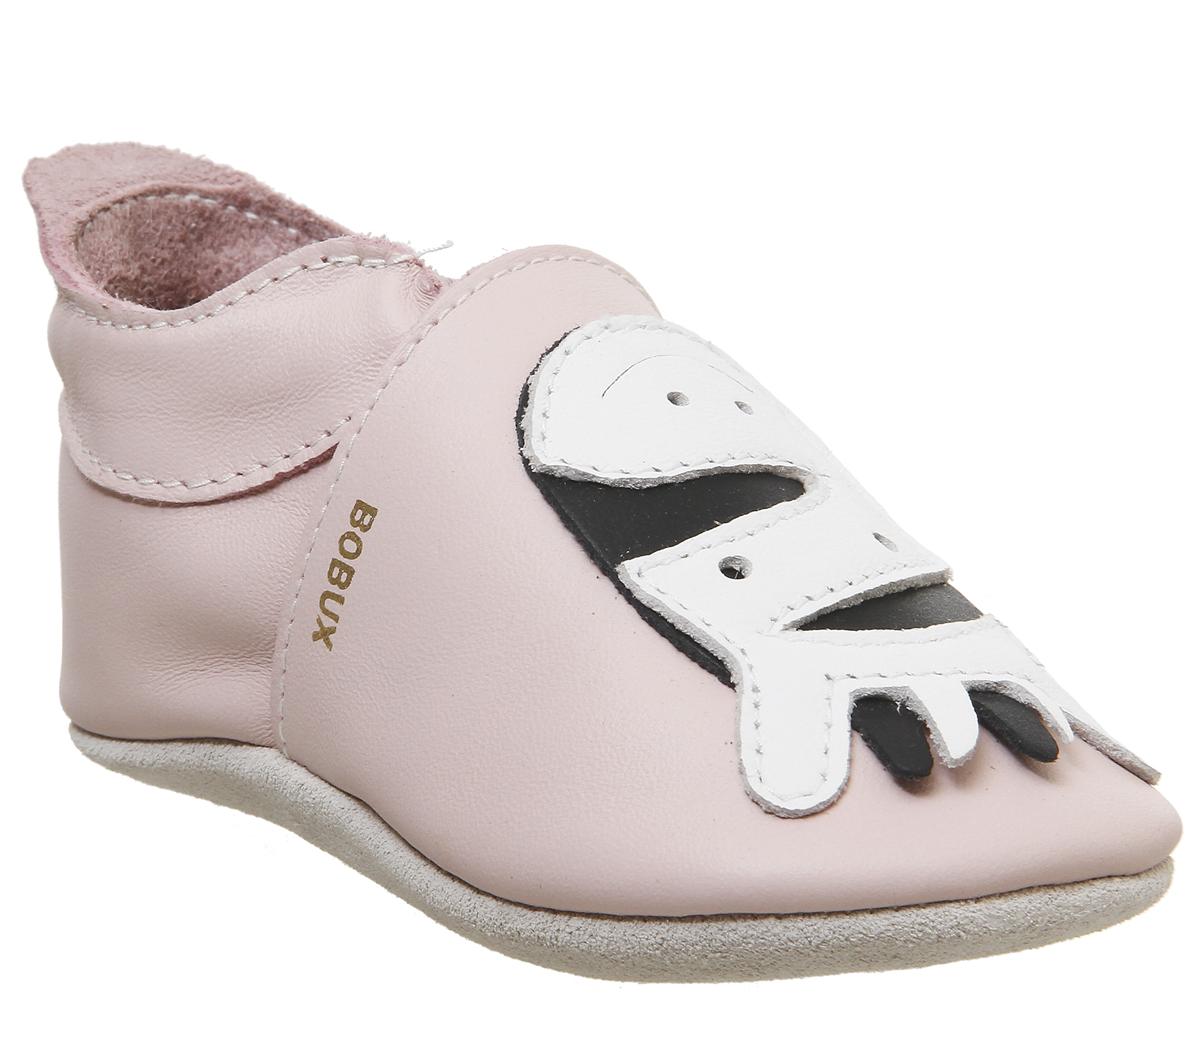 soft sole crib shoes